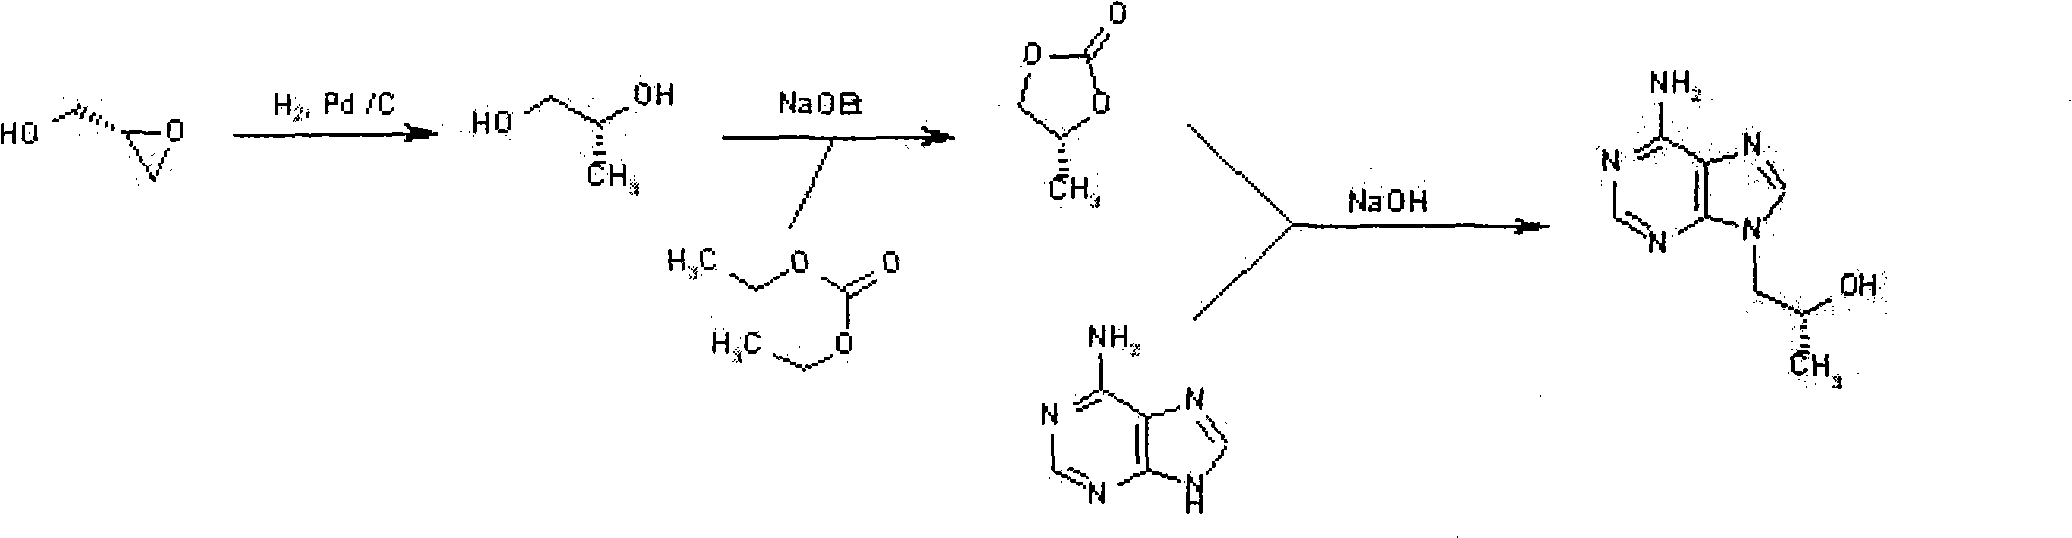 Novel method for synthesizing 9-substituted adenine compound